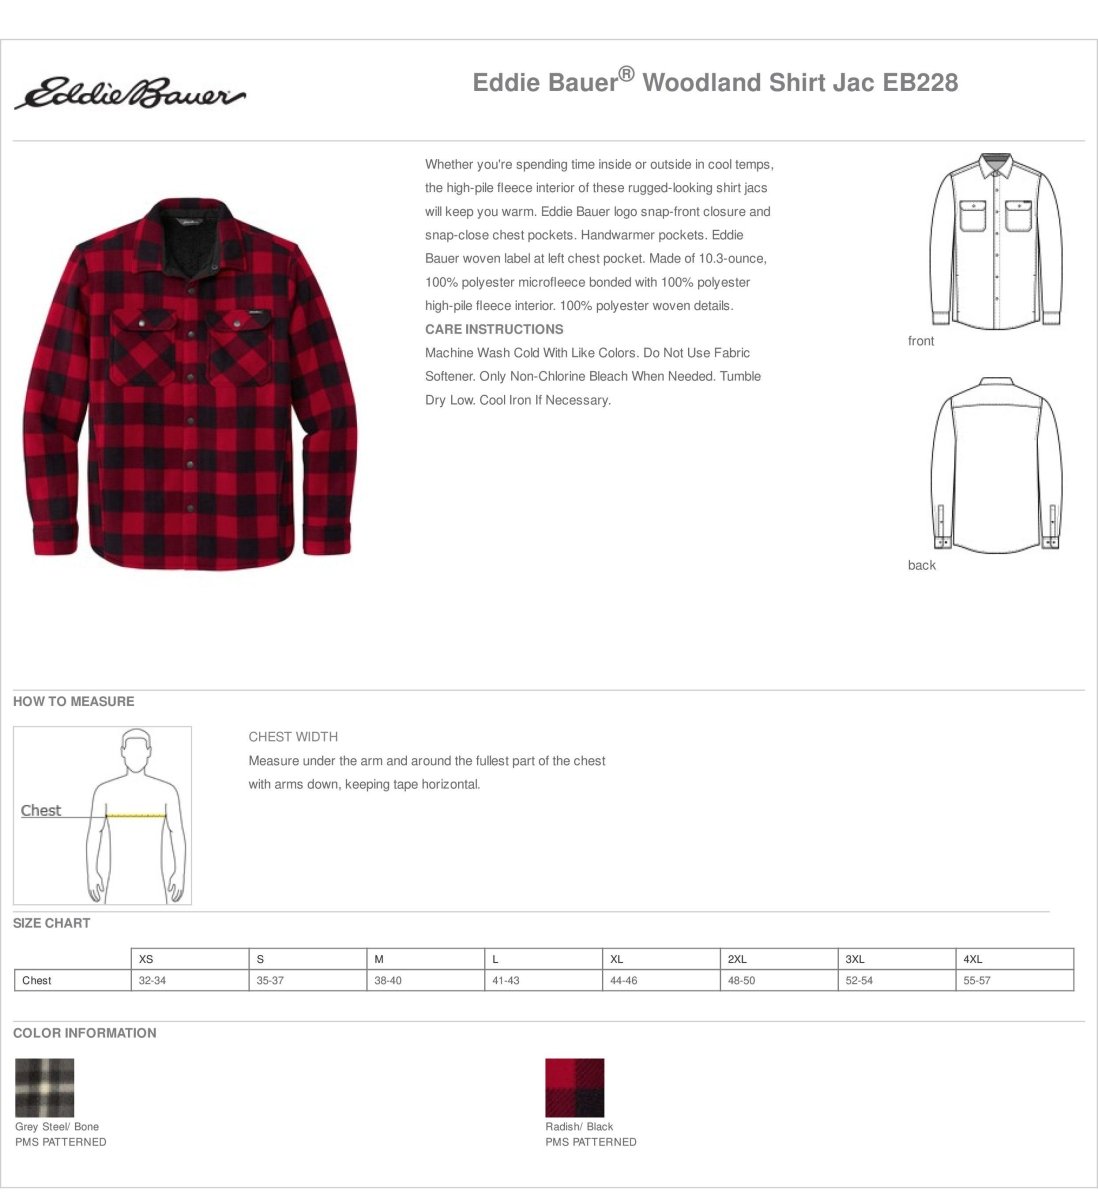 Eddie Bauer Woodland Shirt Jac - Western Skies Design Company